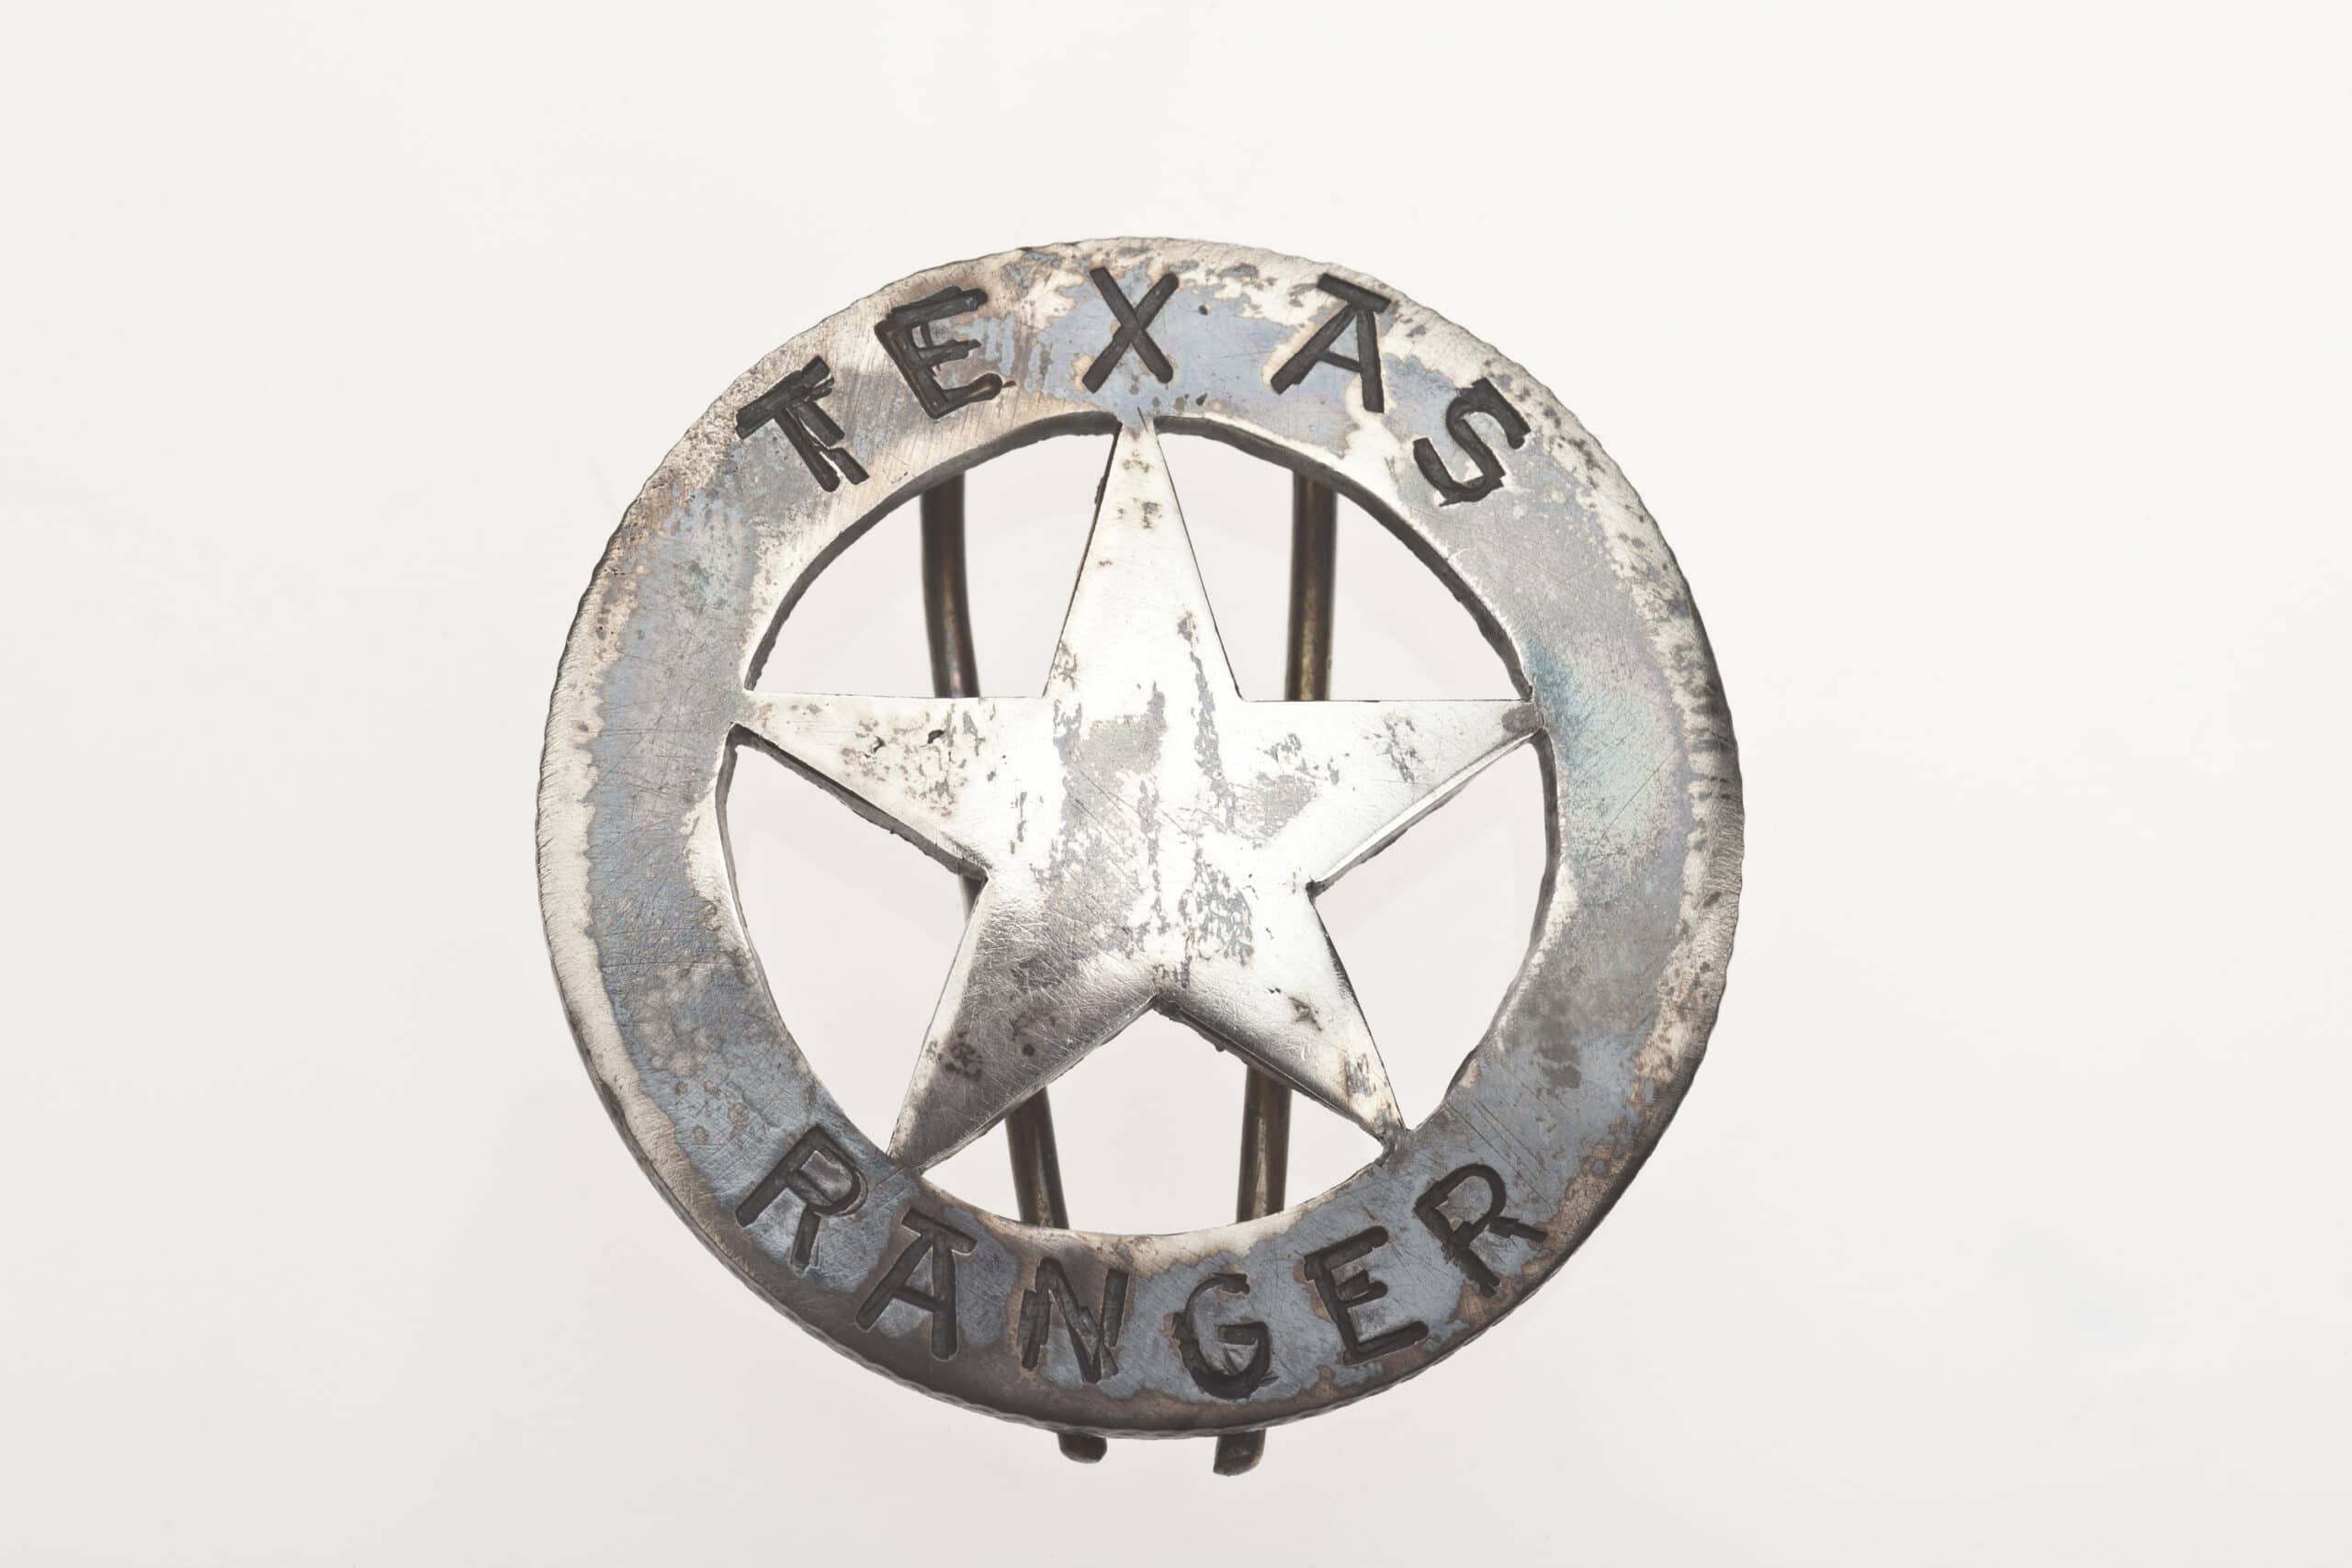 texas rangers badge